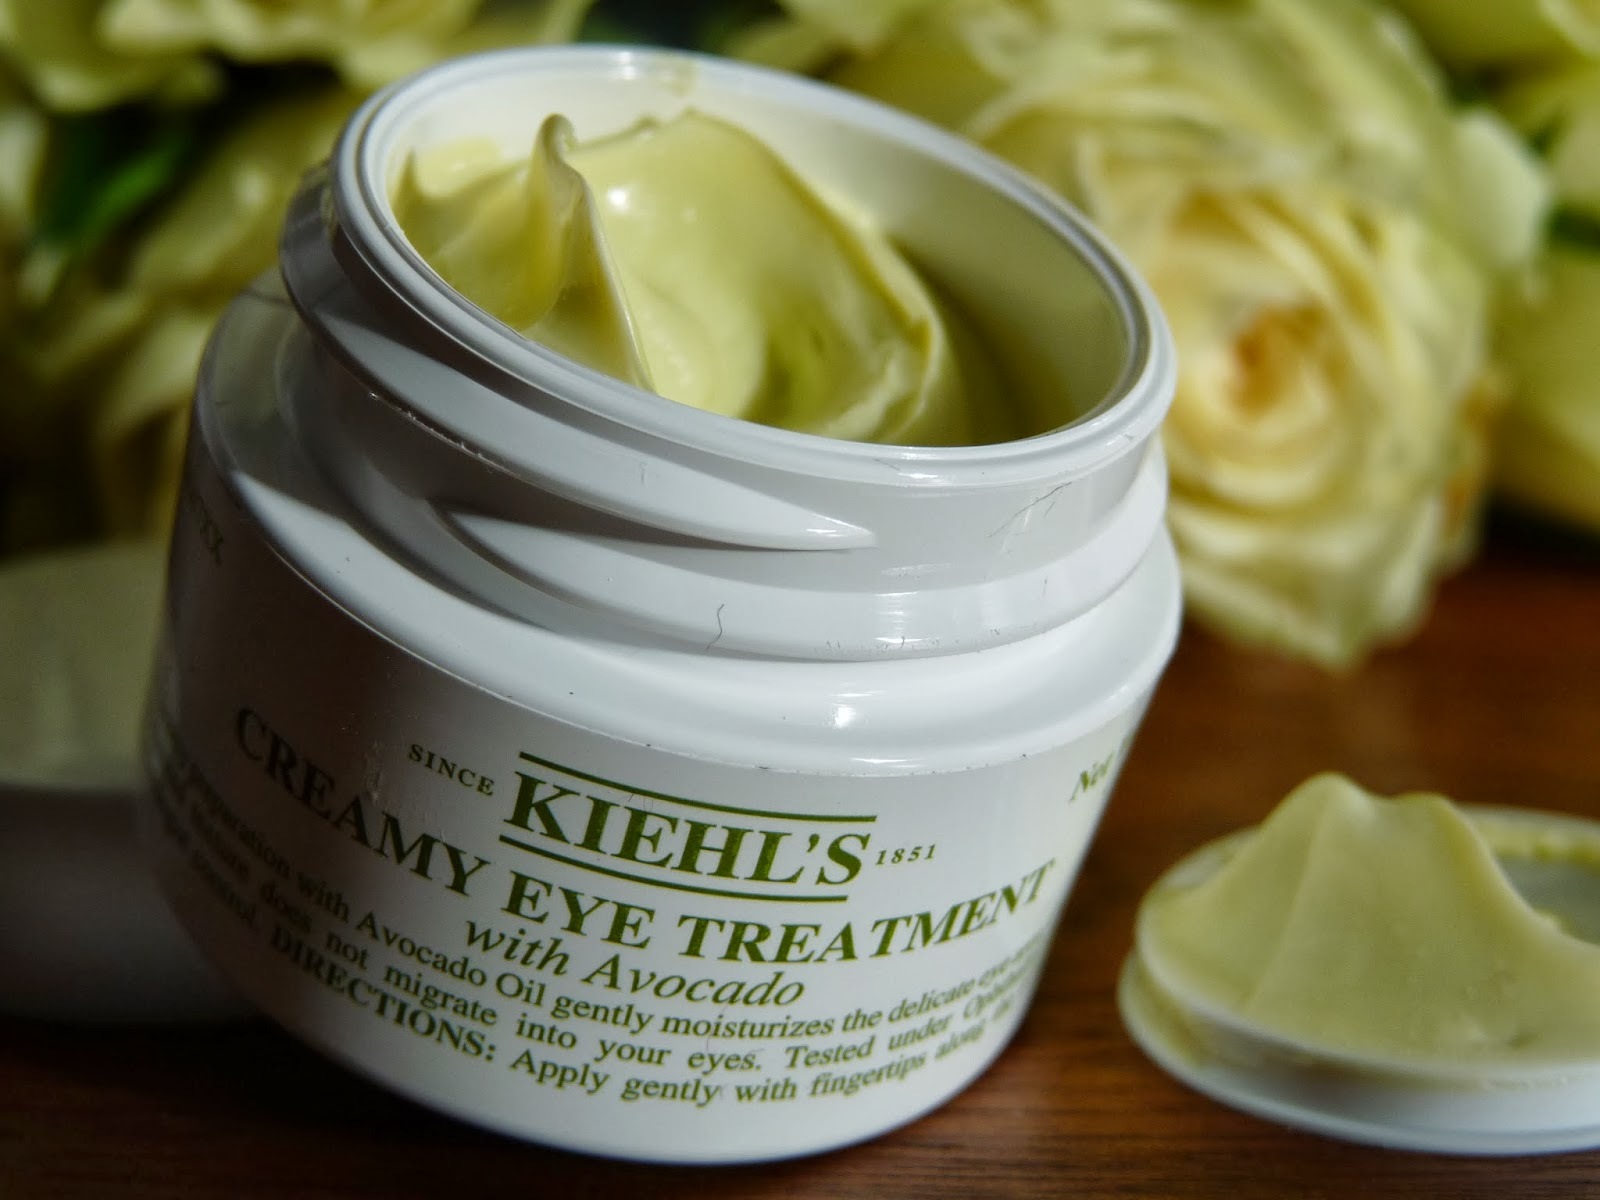 Kem dưỡng mắt Creamy Eye Treatment With Avocado của Kiehl's